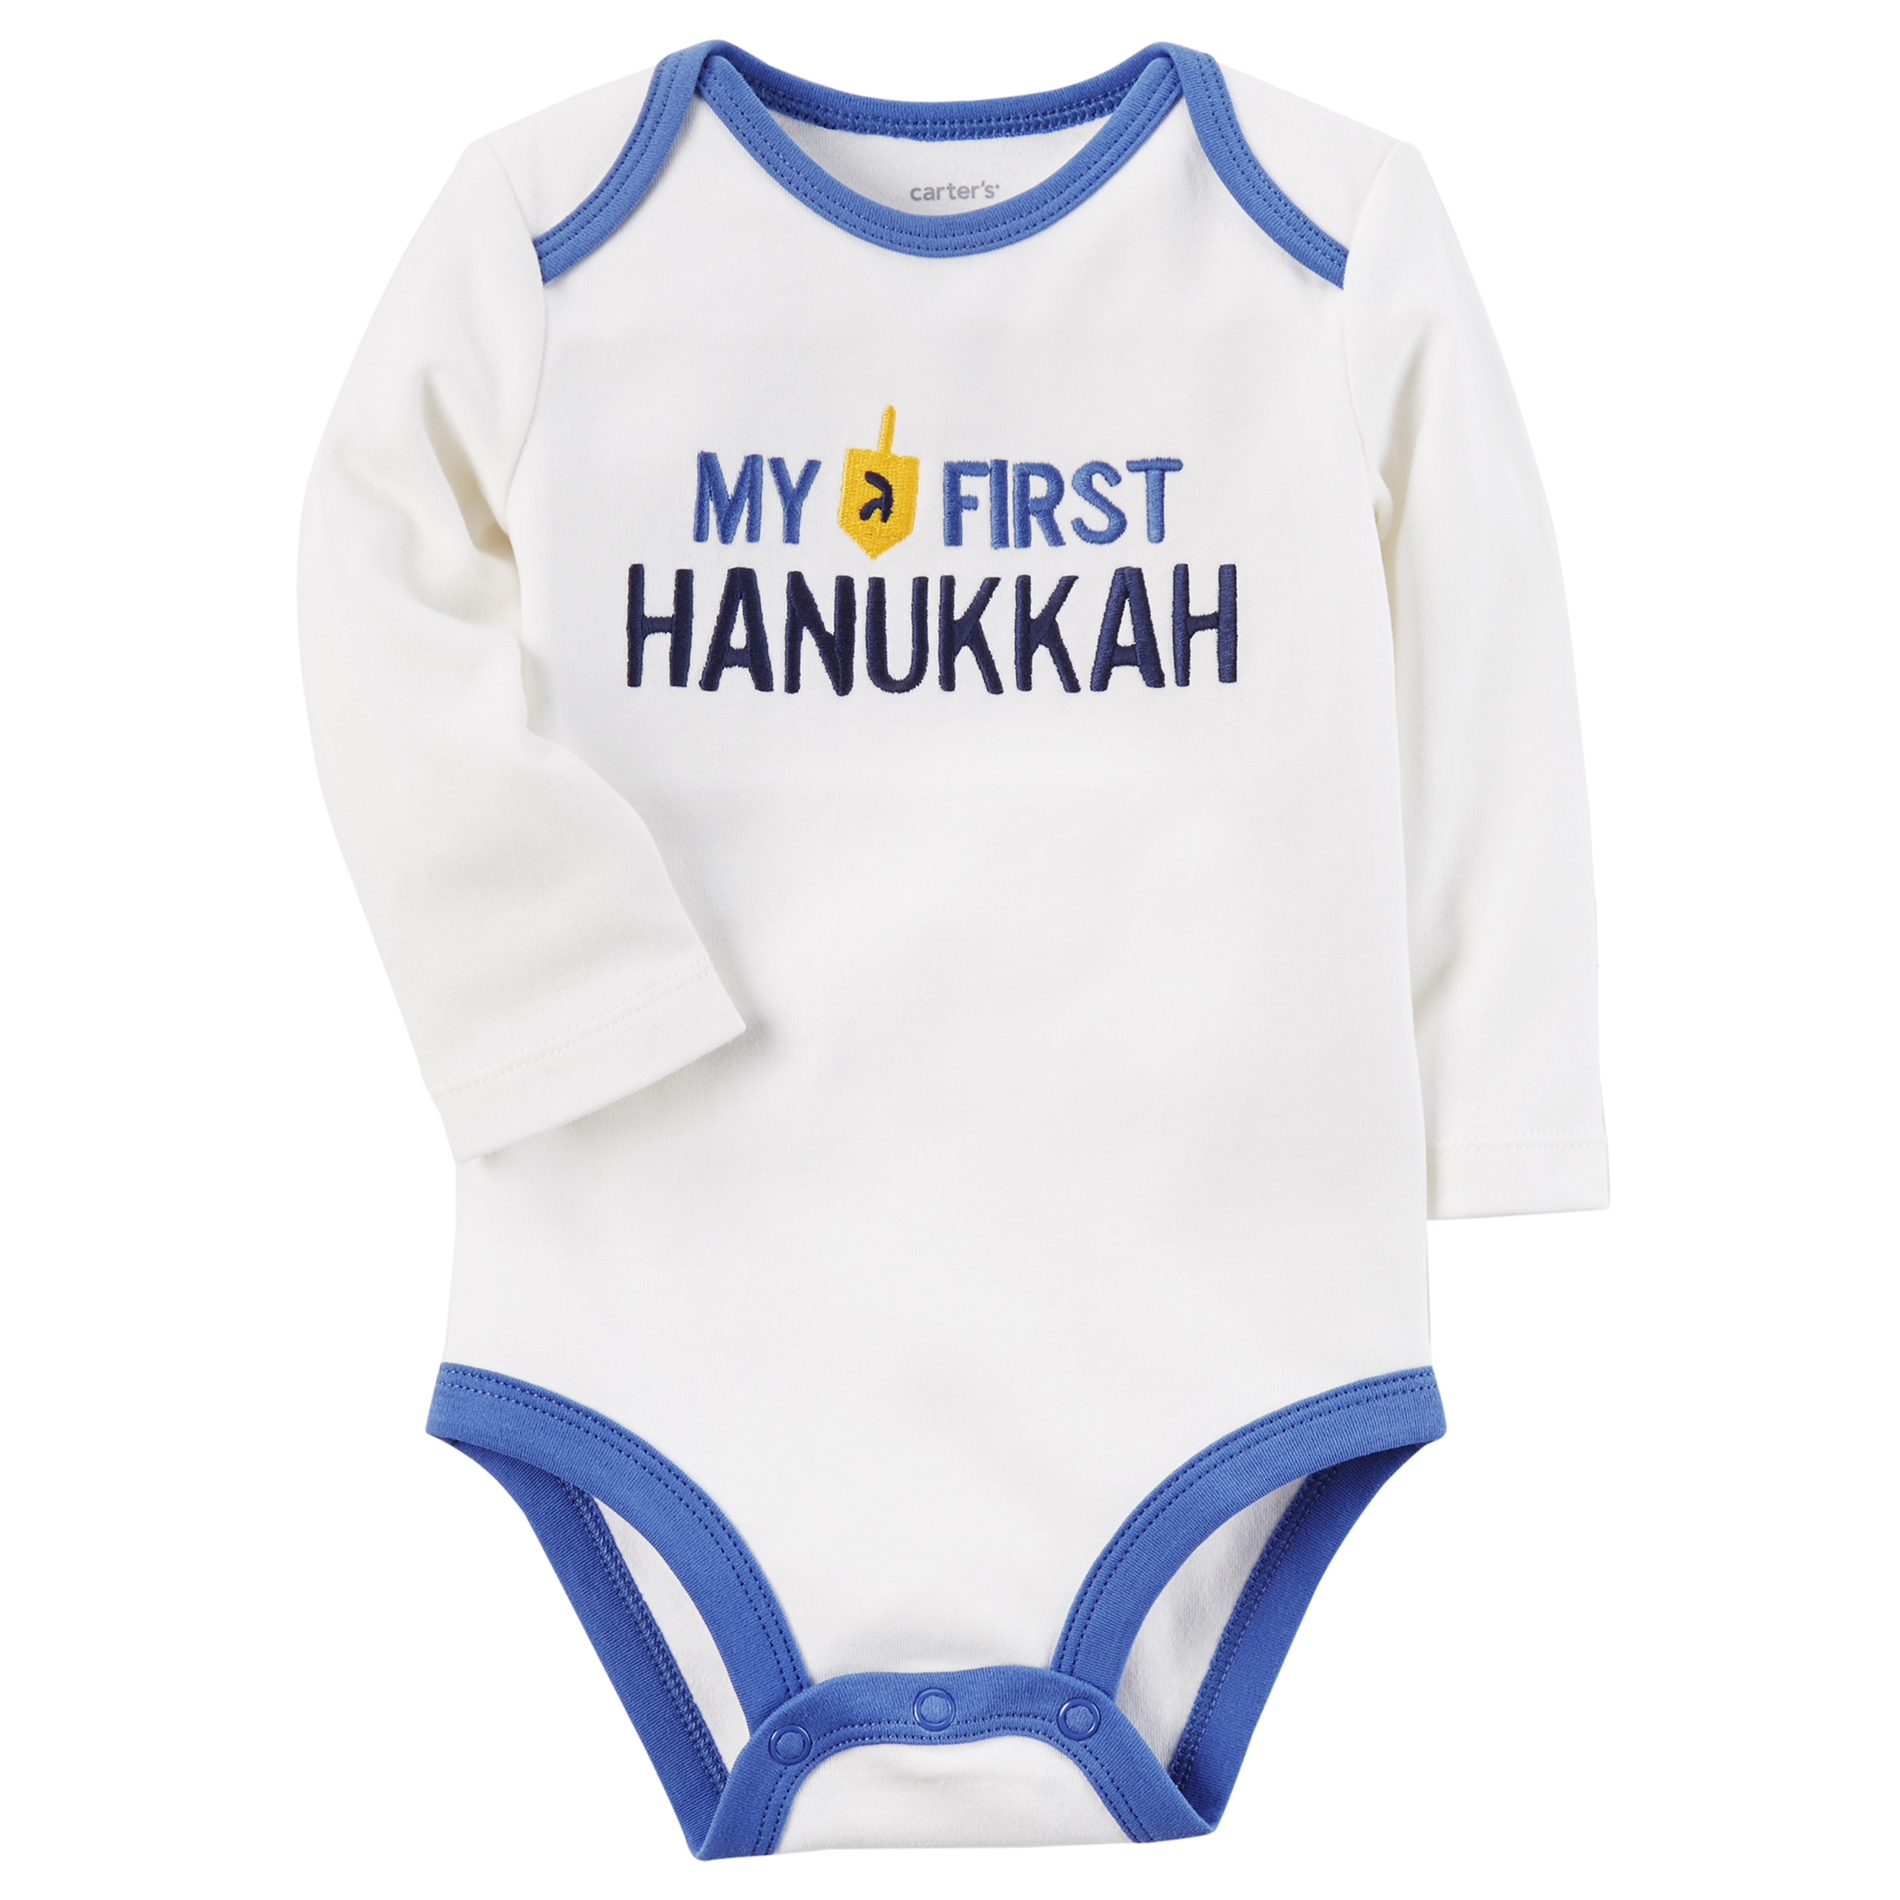 Carter's Infants&#8217; Slogan Bodysuit - My 1st Hanukkah